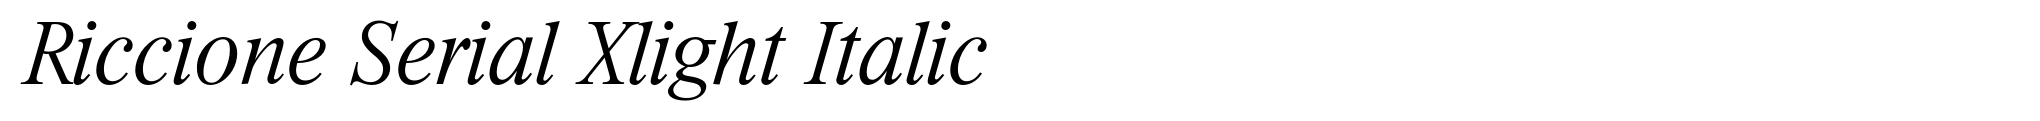 Riccione Serial Xlight Italic image